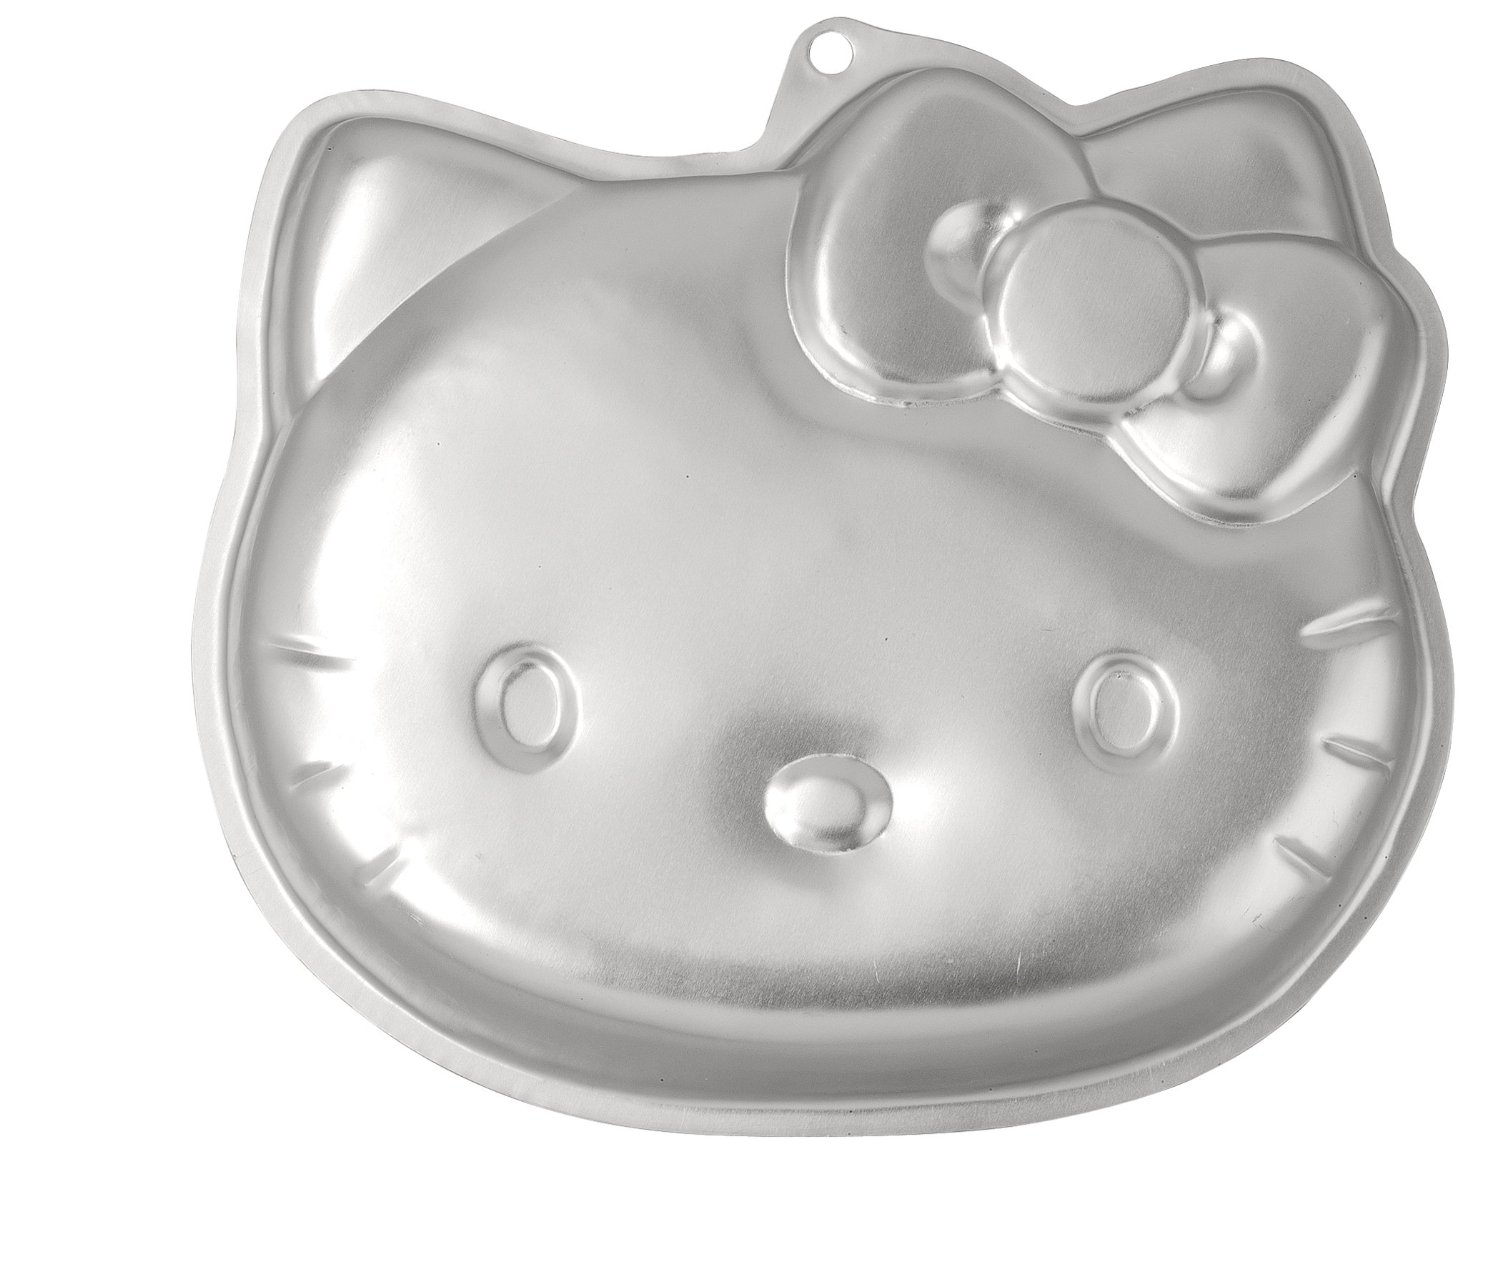 Wilton 'Hello Kitty' Novelty Cake Pan (Hello Kitty) - image 2 of 3